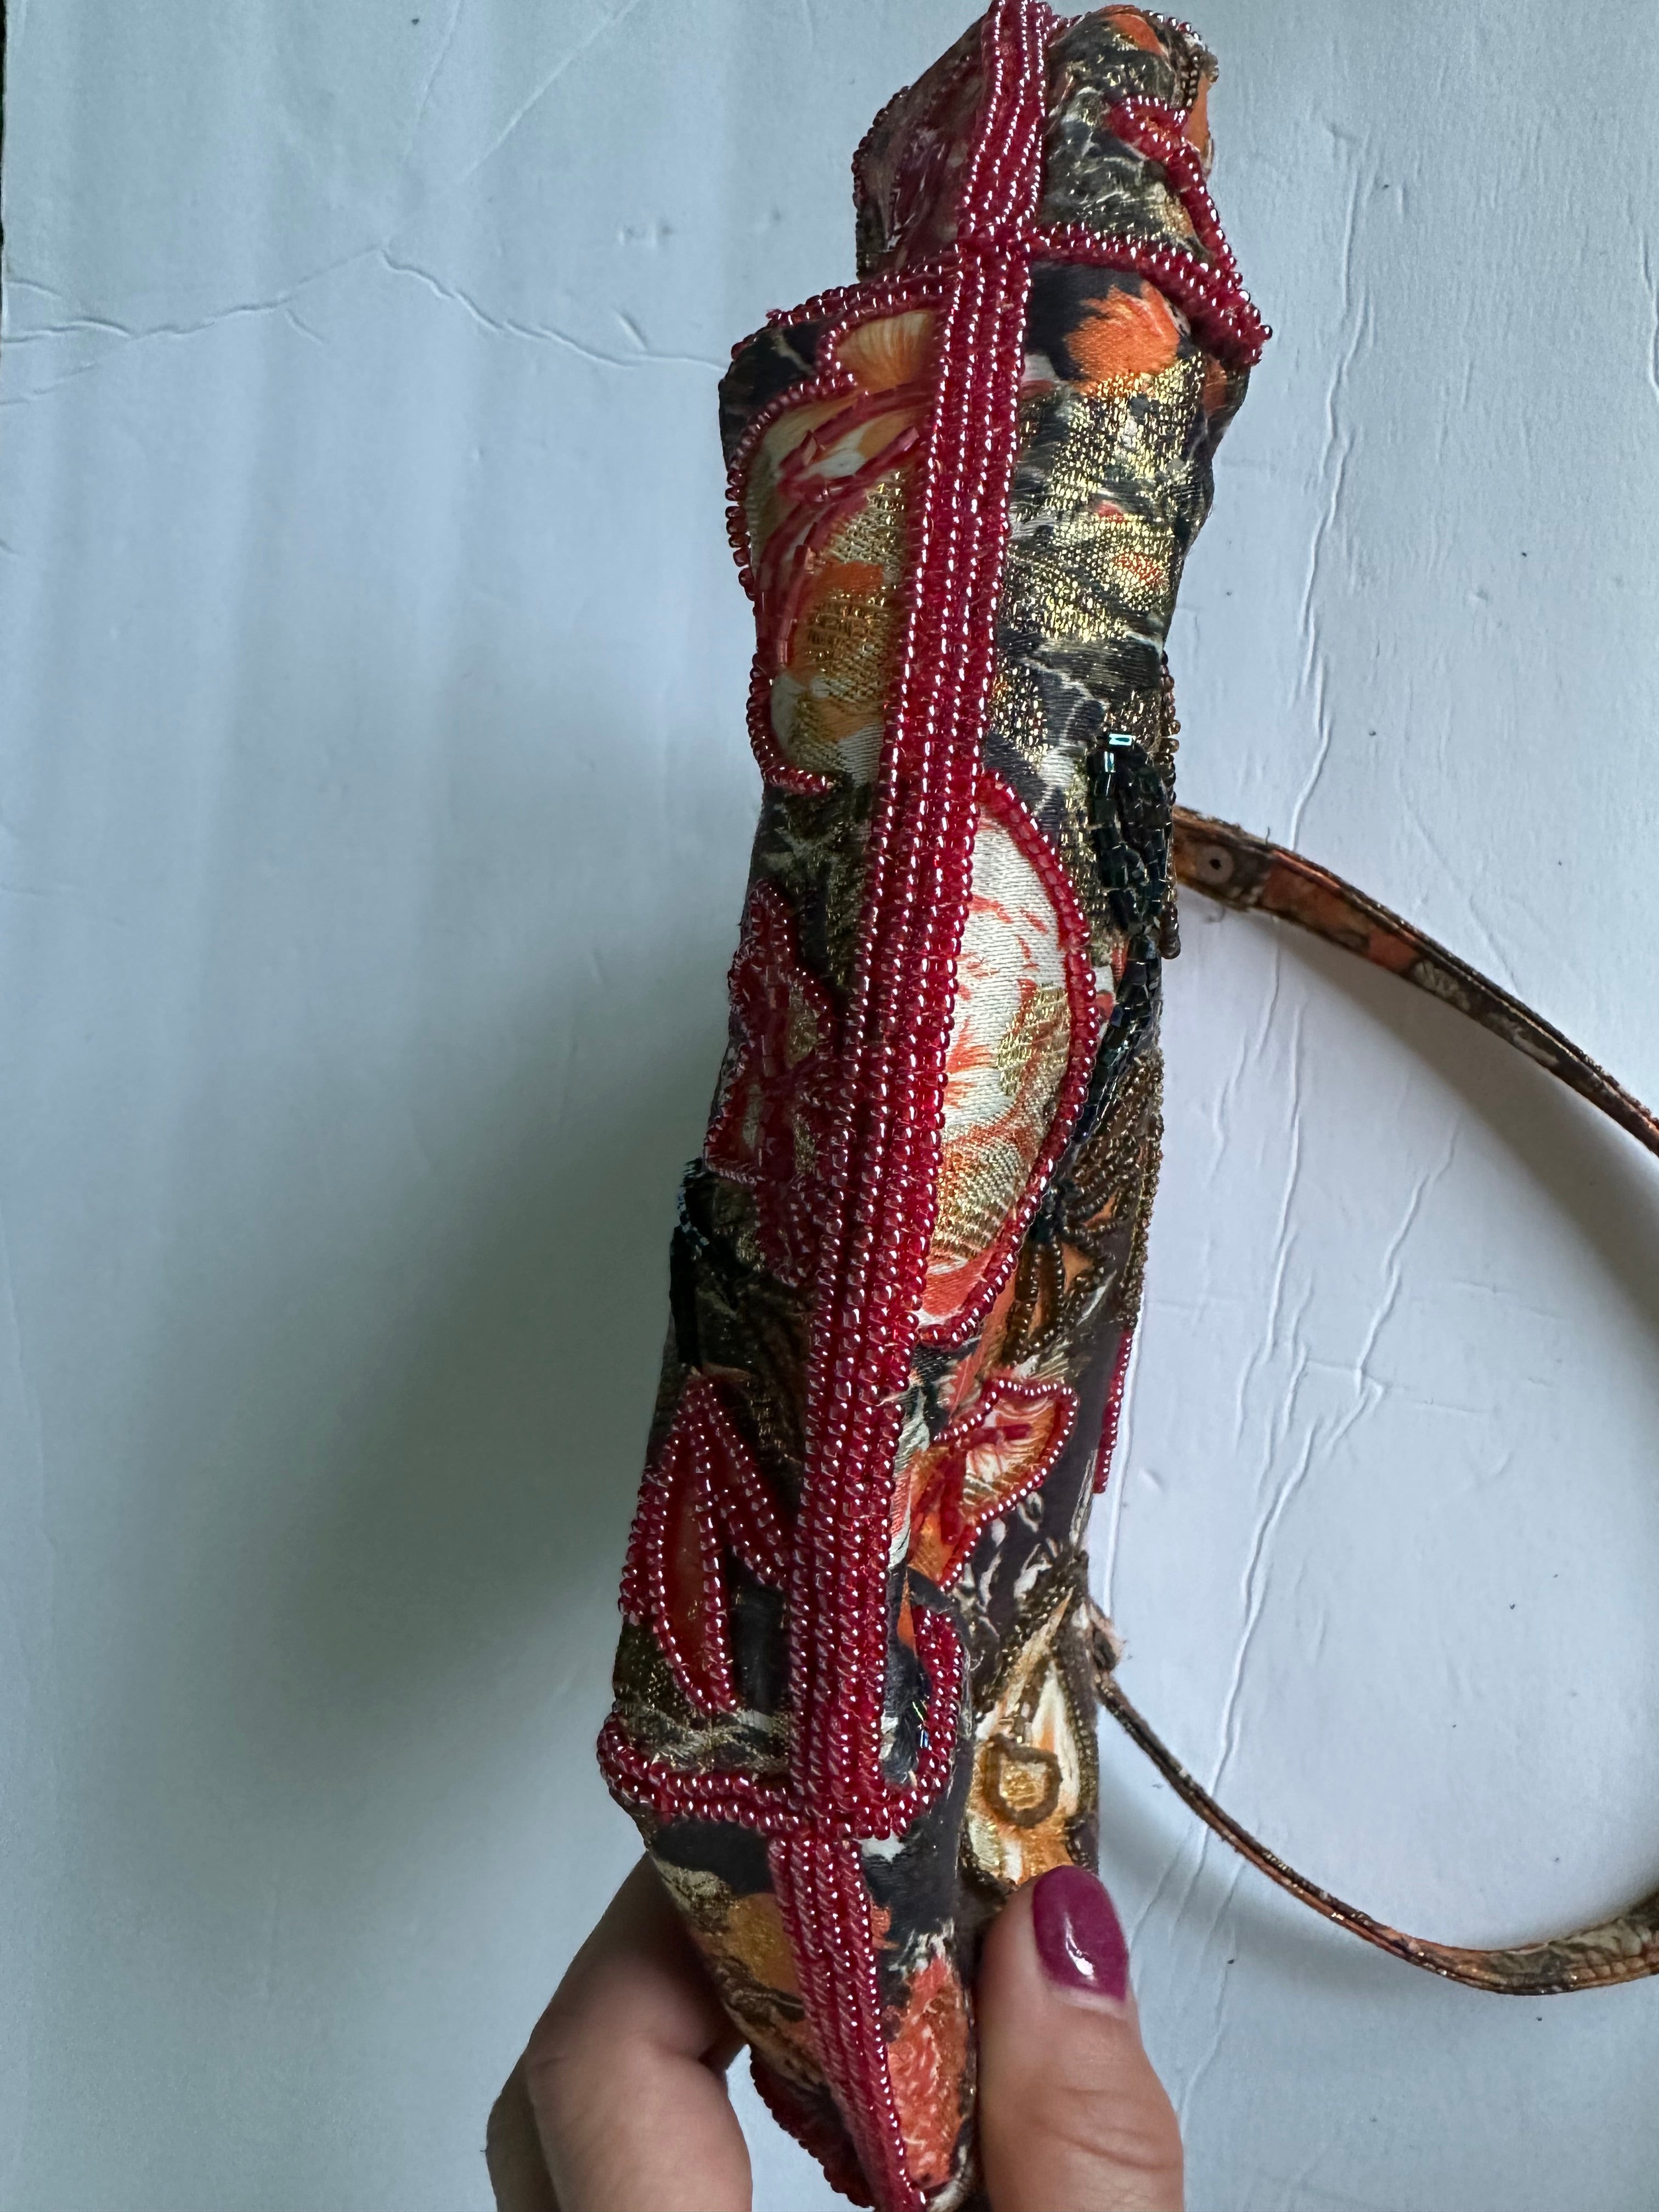 Vintage Colorful Floral Sequin Purse Bag Clutch Stunning